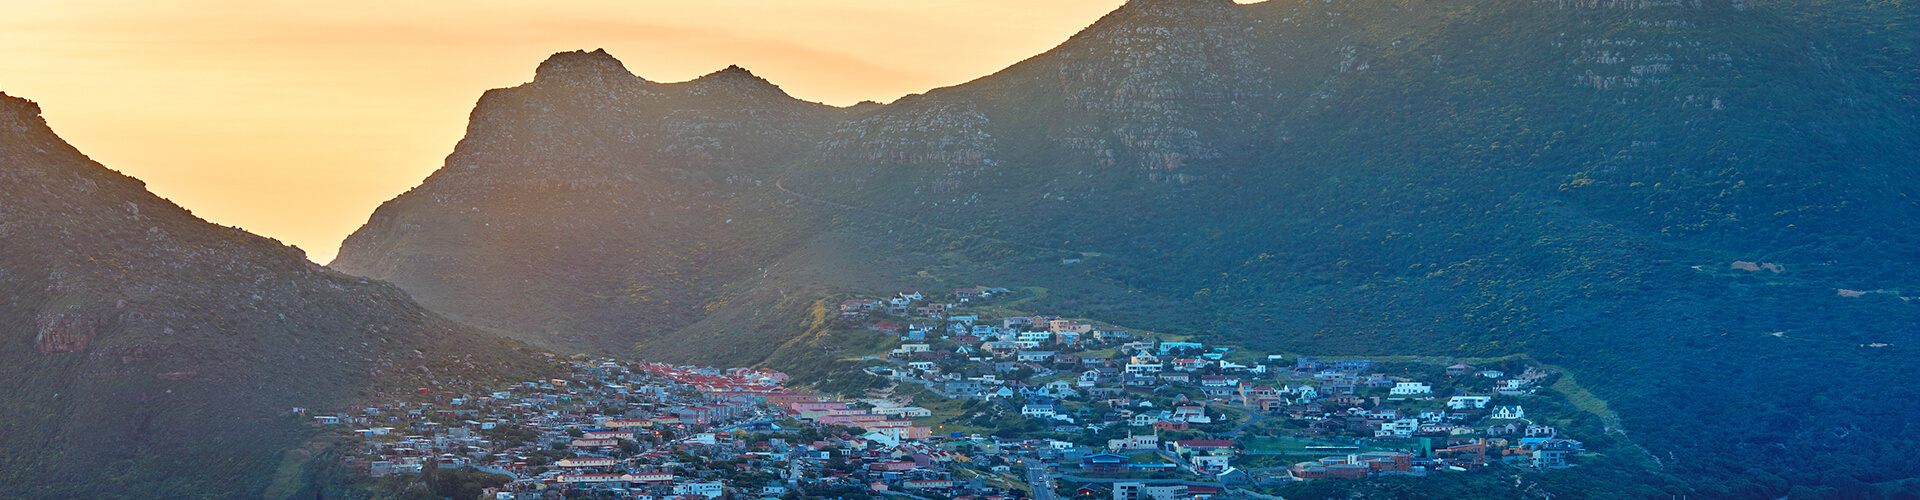 Ultra Trail Cape Town